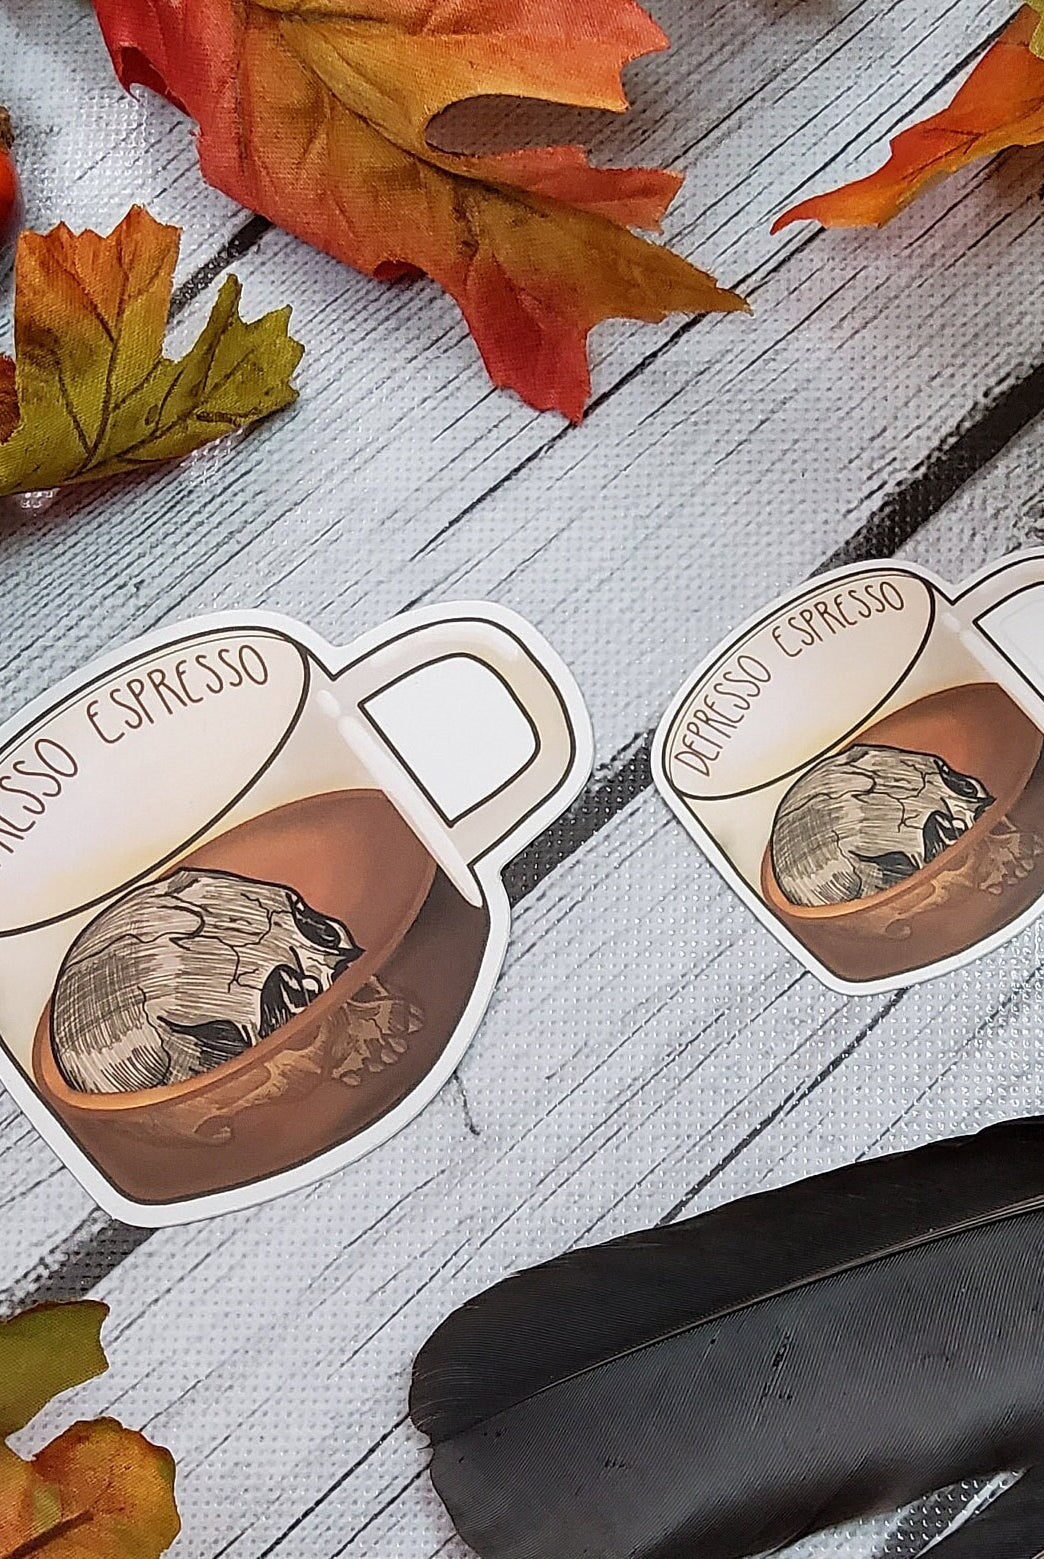 MATTE STICKER: Depresso Espresso Skull Mug Sticker , Depresso Espresso Coffee Sarcasm Sticker , Skull Coffee Sticker , Depresso Sticker